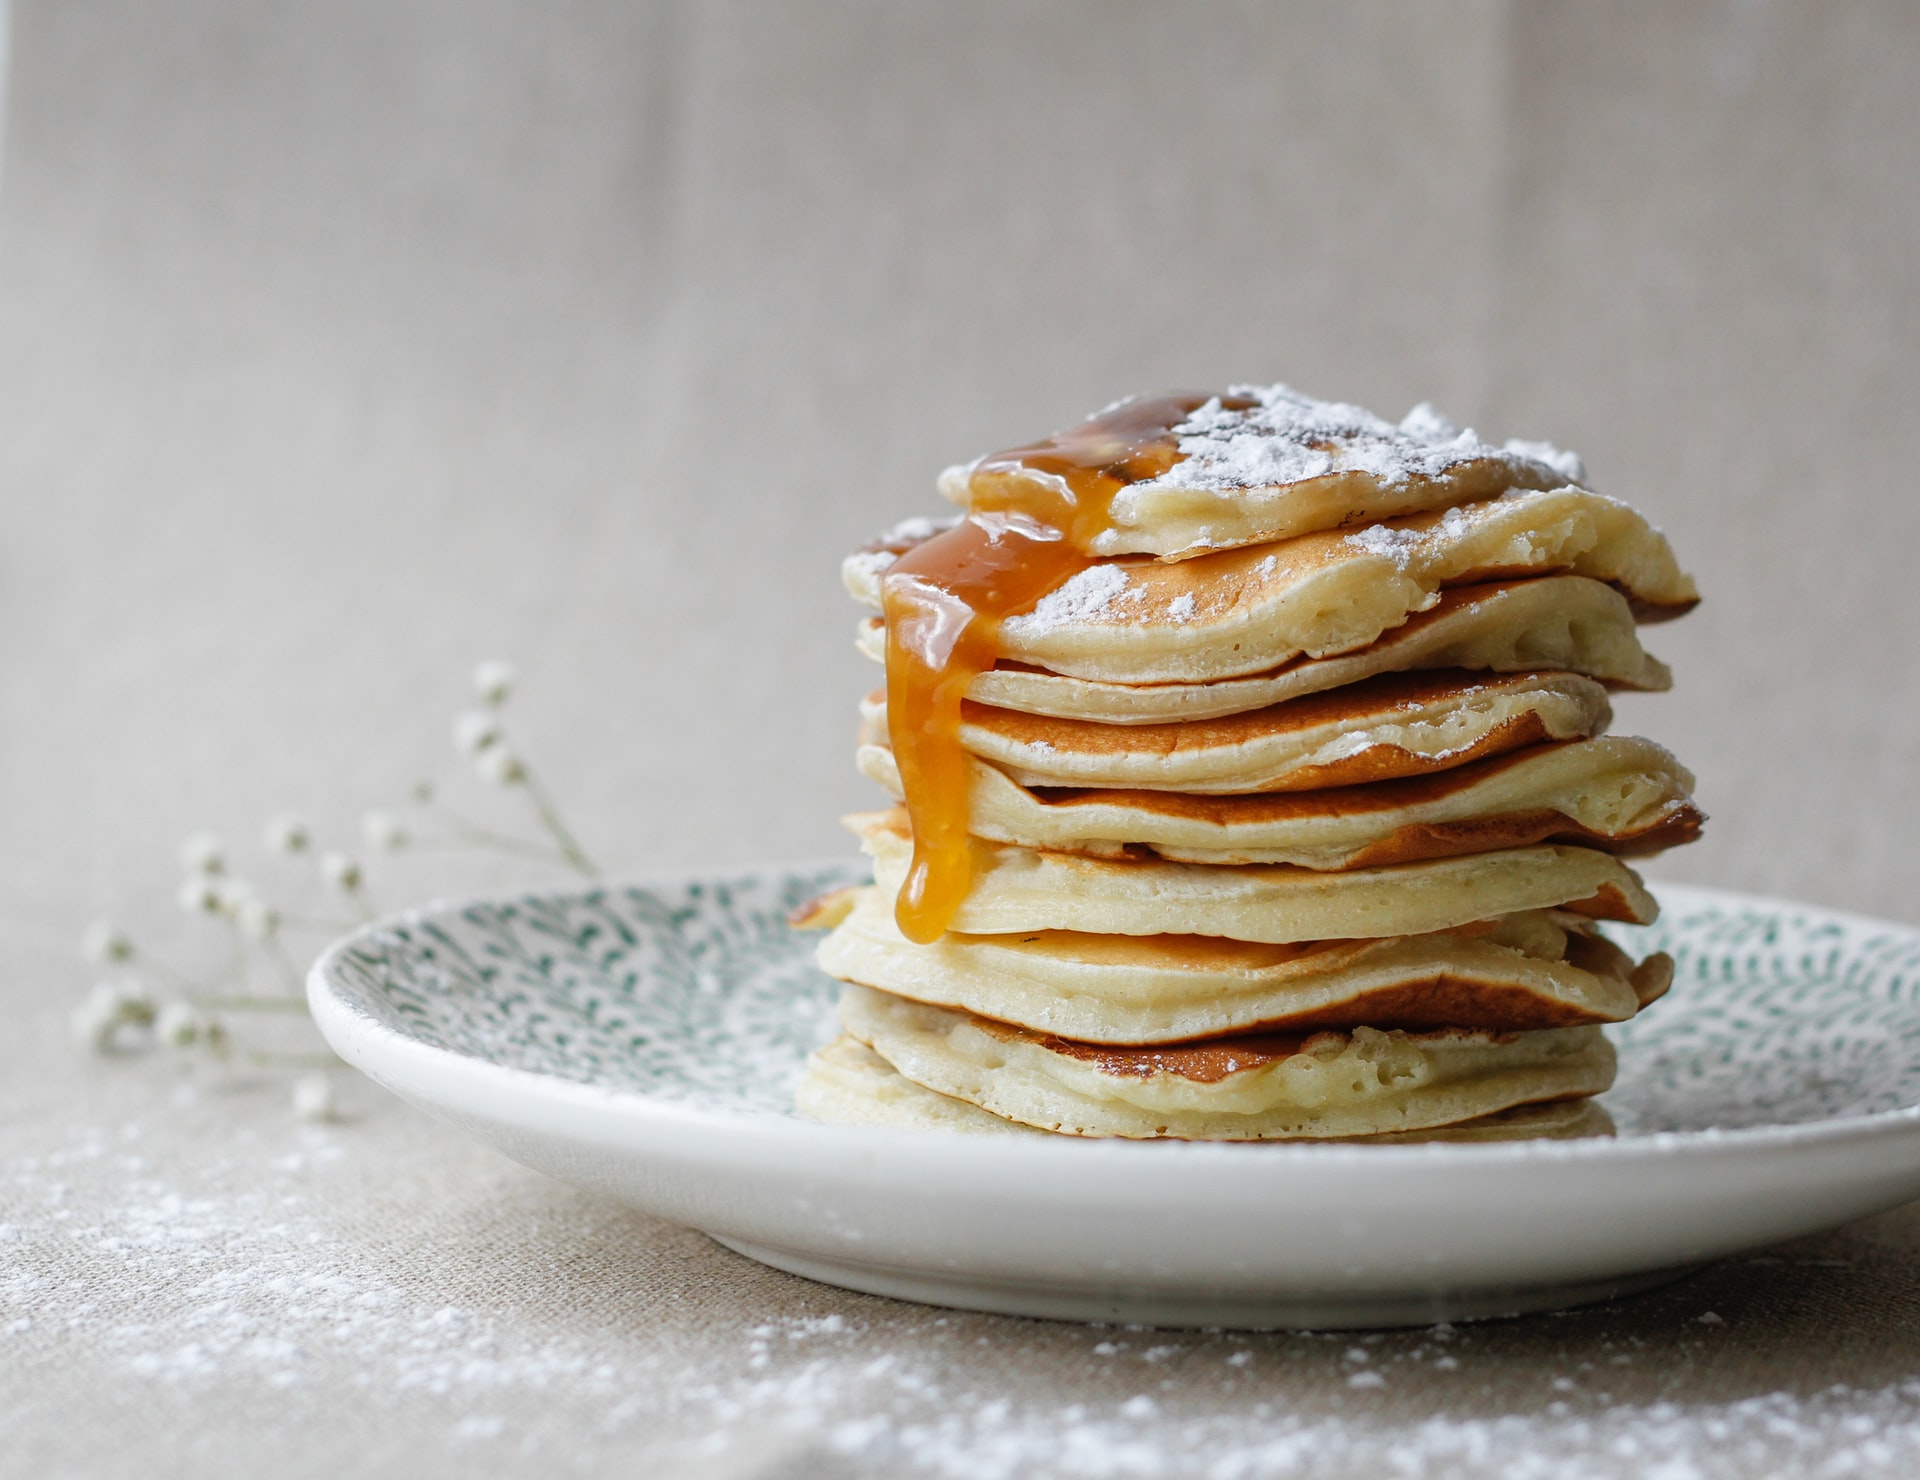 Pancake - Foto di Anna Zaro su Unsplash